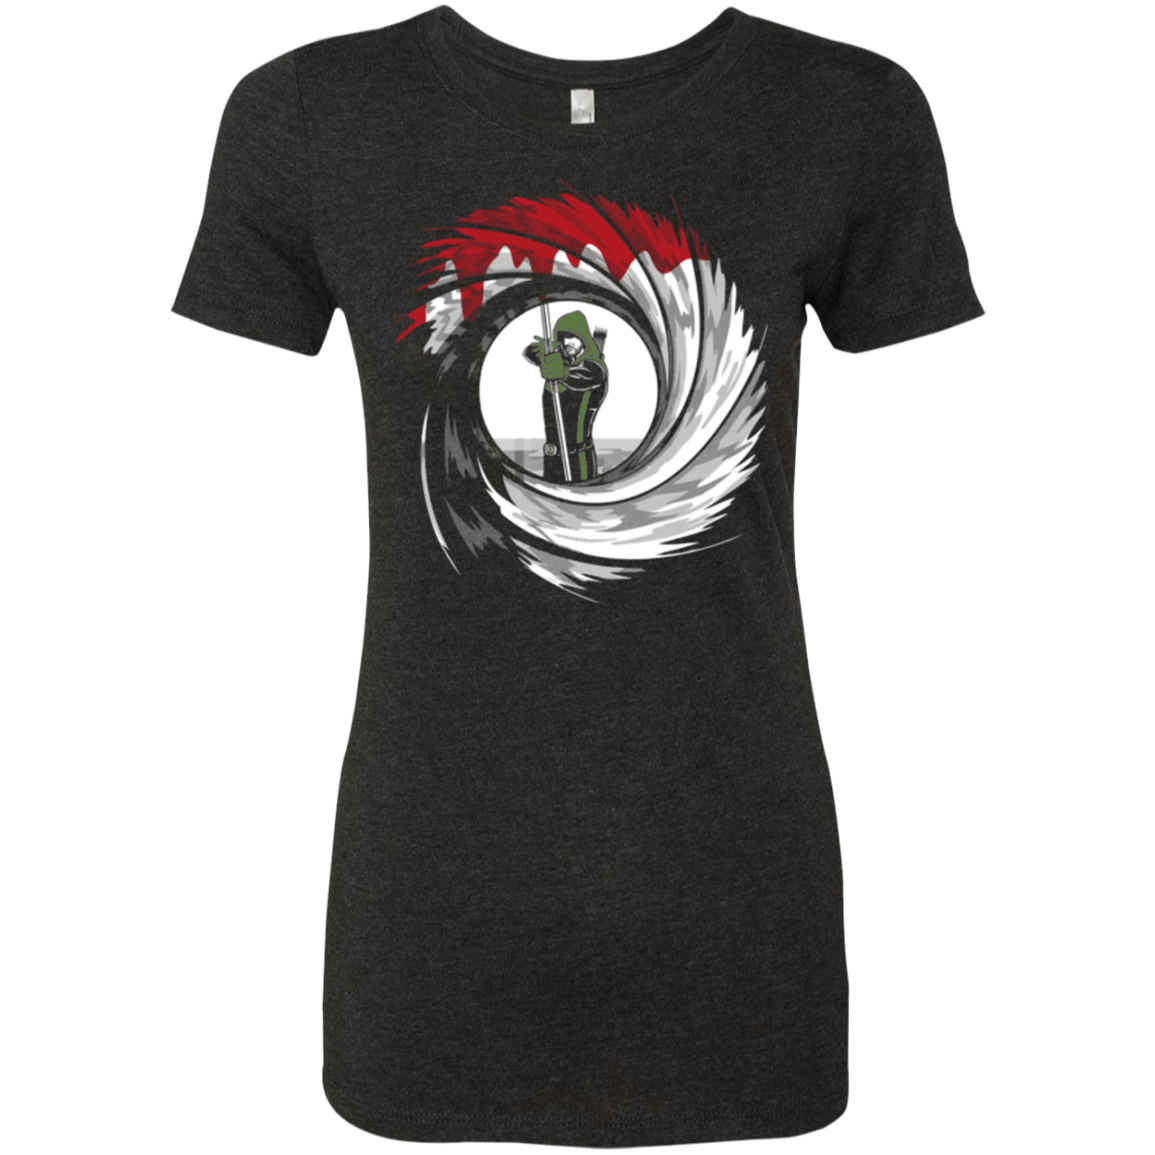 Green Shot Women's Triblend T-Shirt